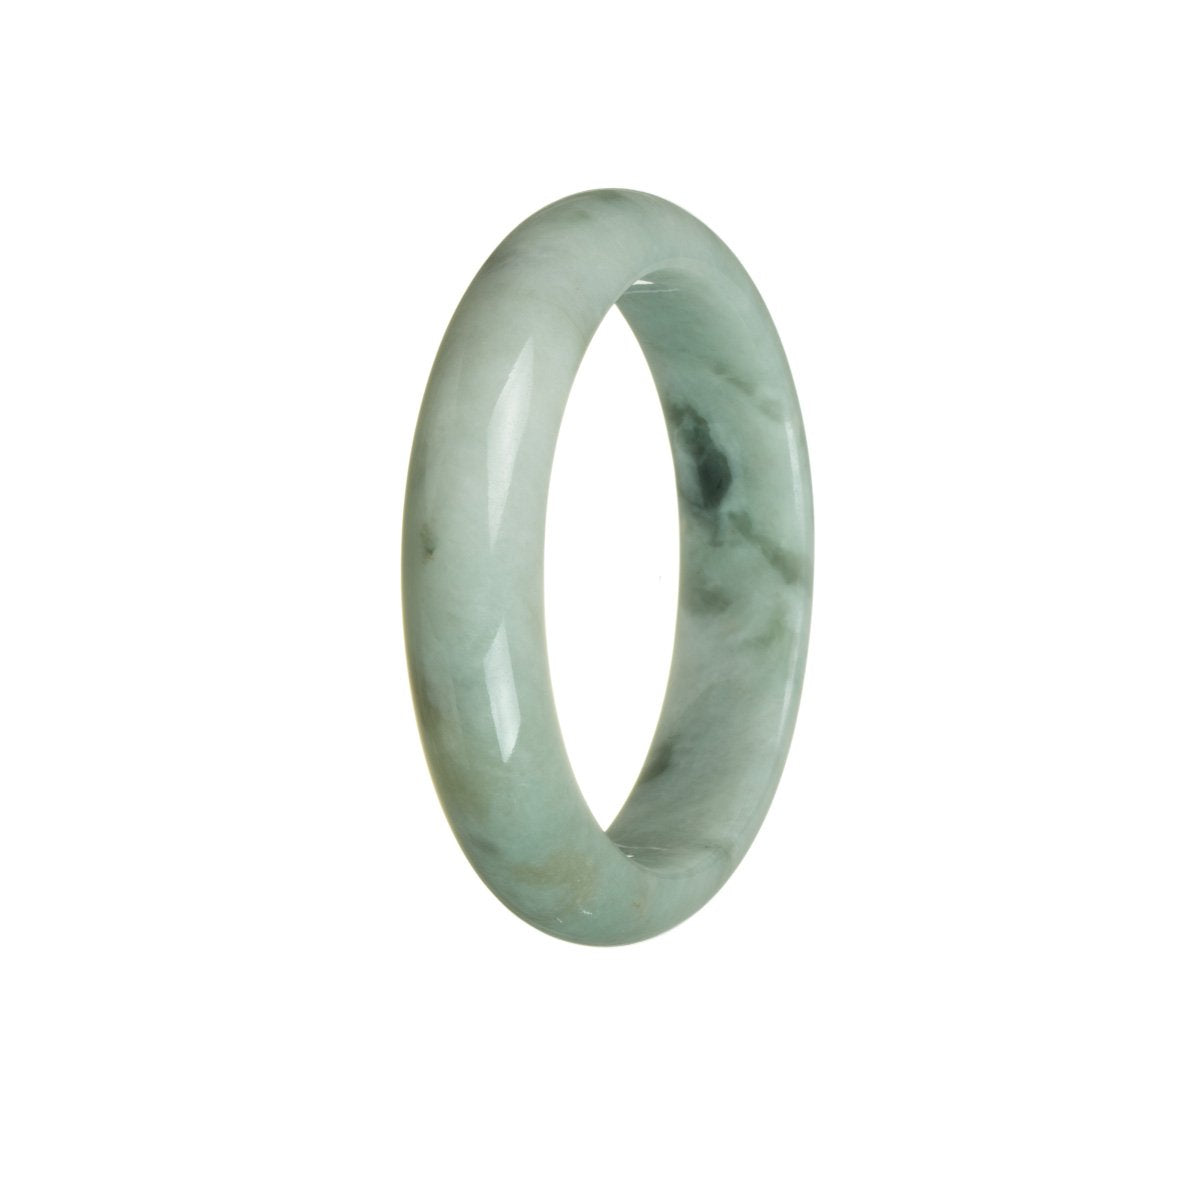 Genuine Type A Bluish Green Burmese Jade Bangle Bracelet - 56mm Half Moon